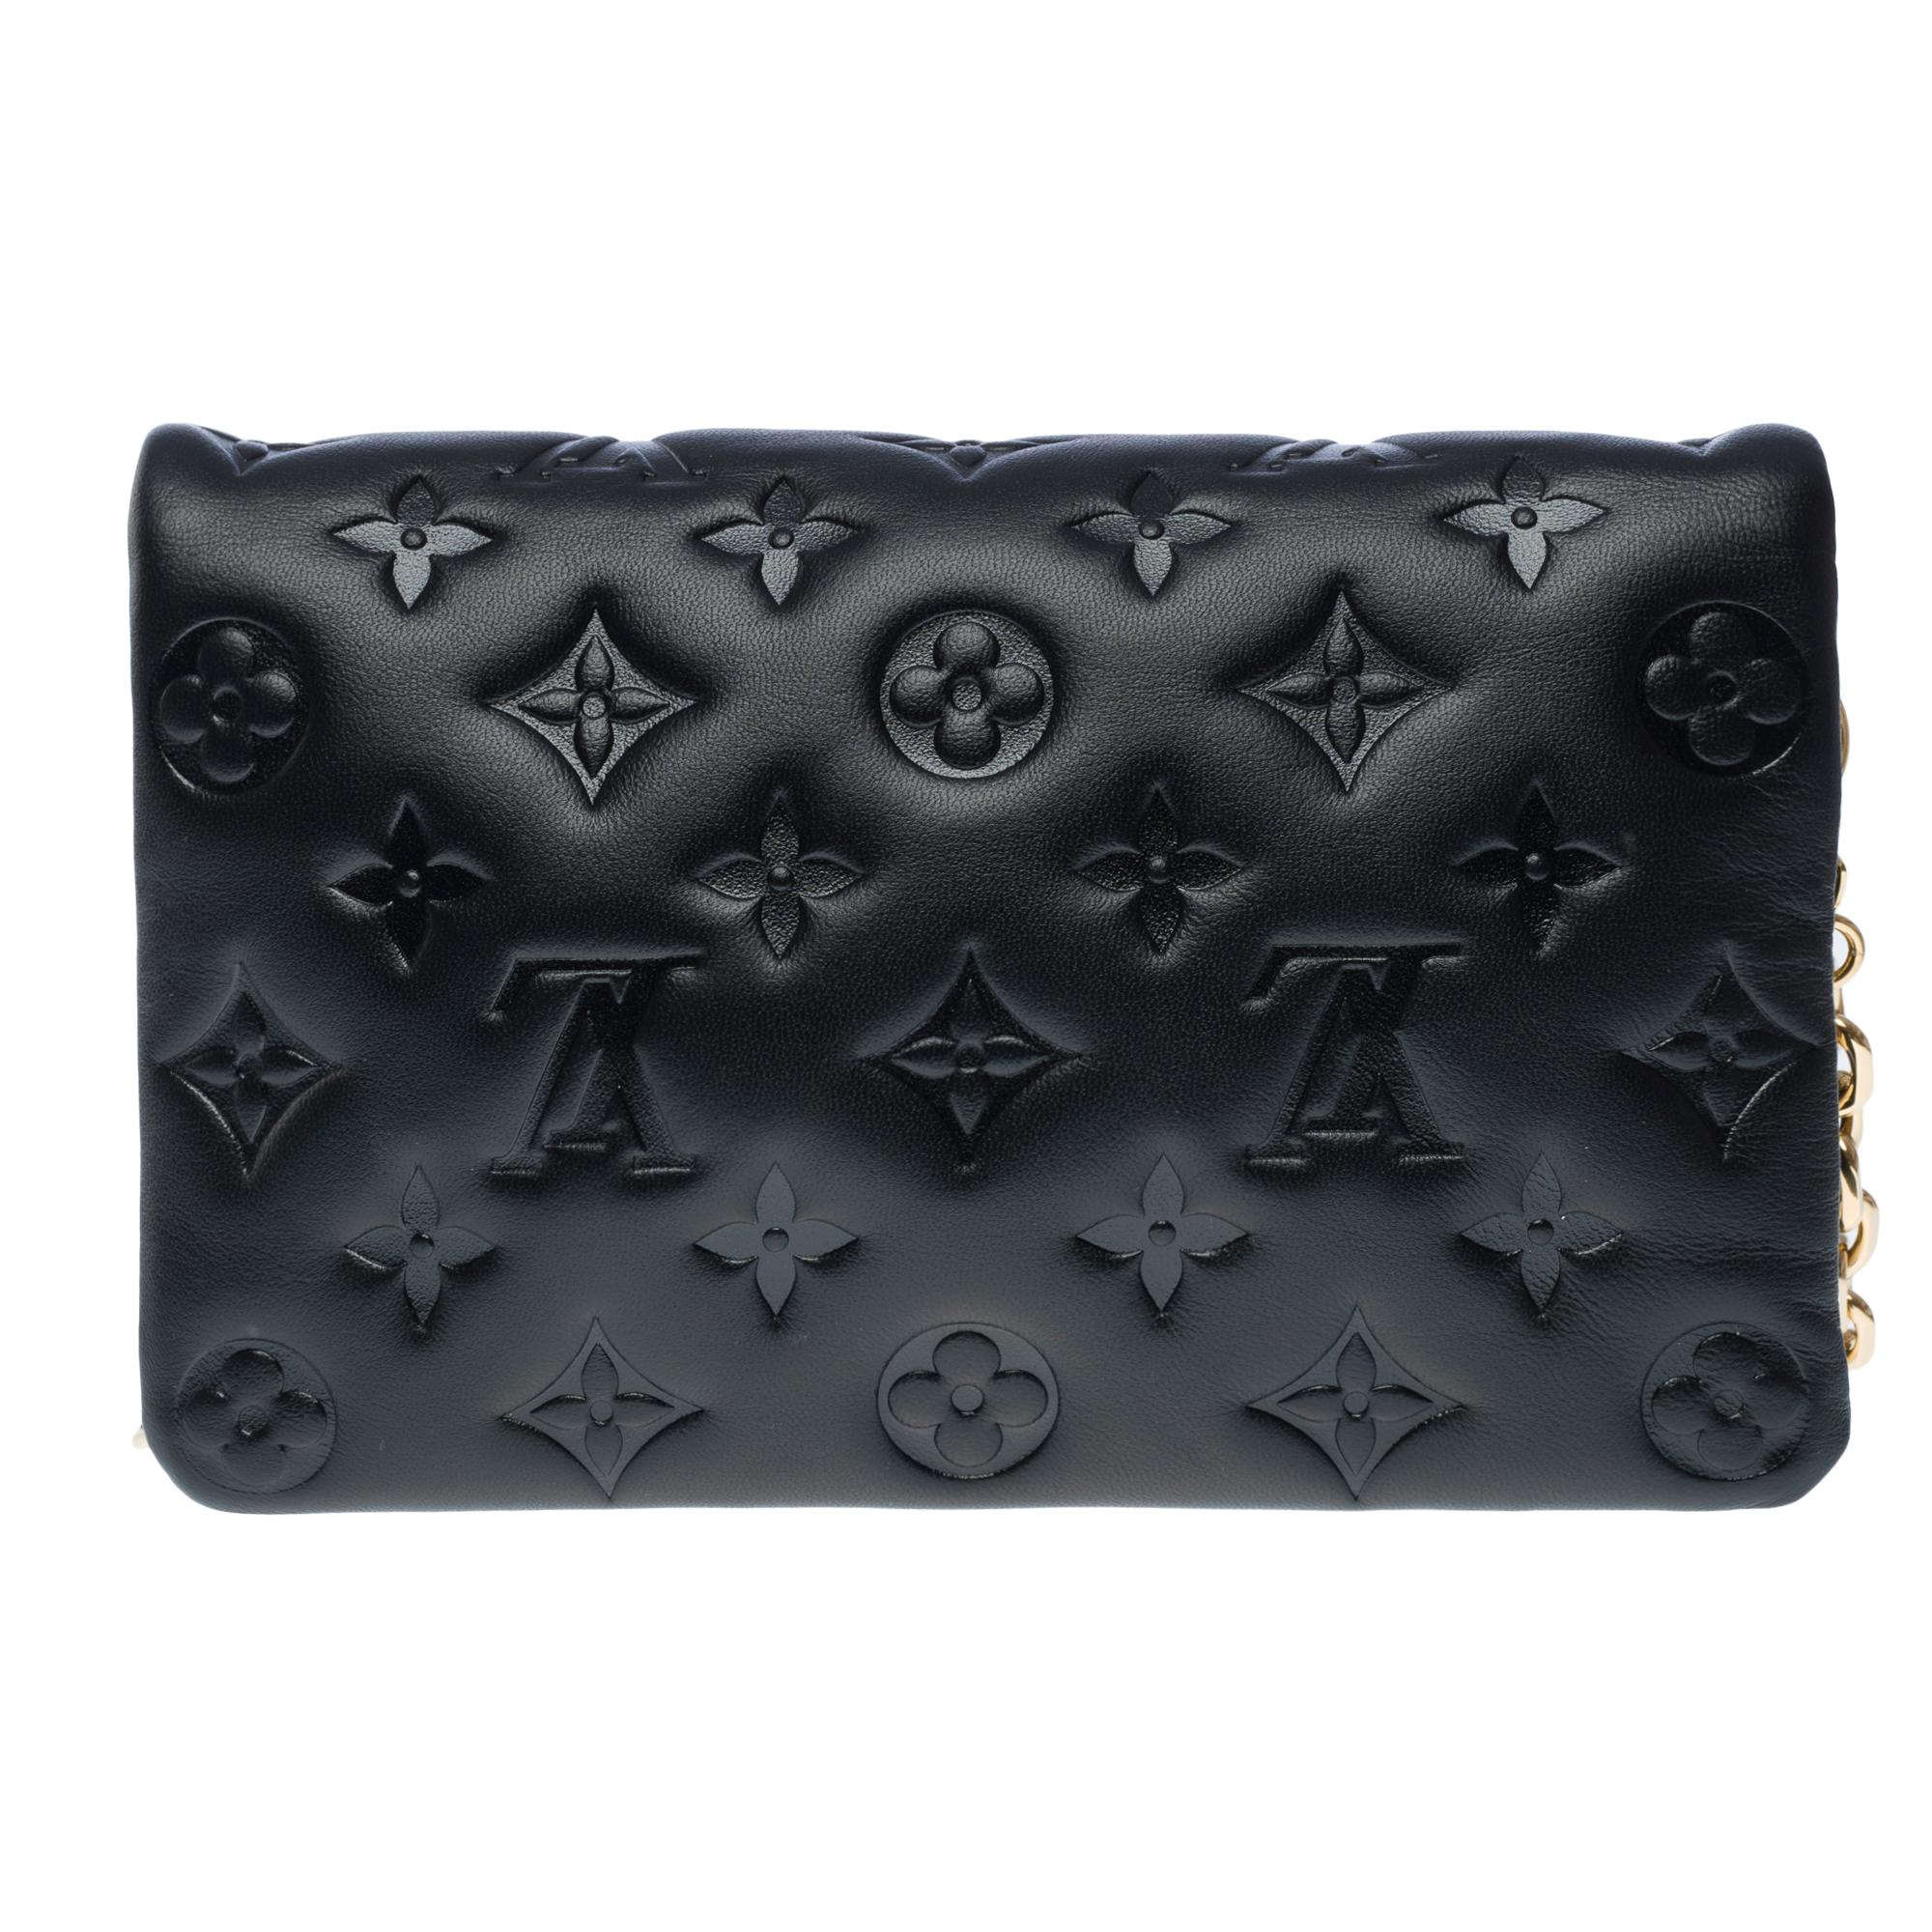 Women's or Men's Louis Vuitton Cushion shoulder bag in black embossed monogram lambskin, GHW